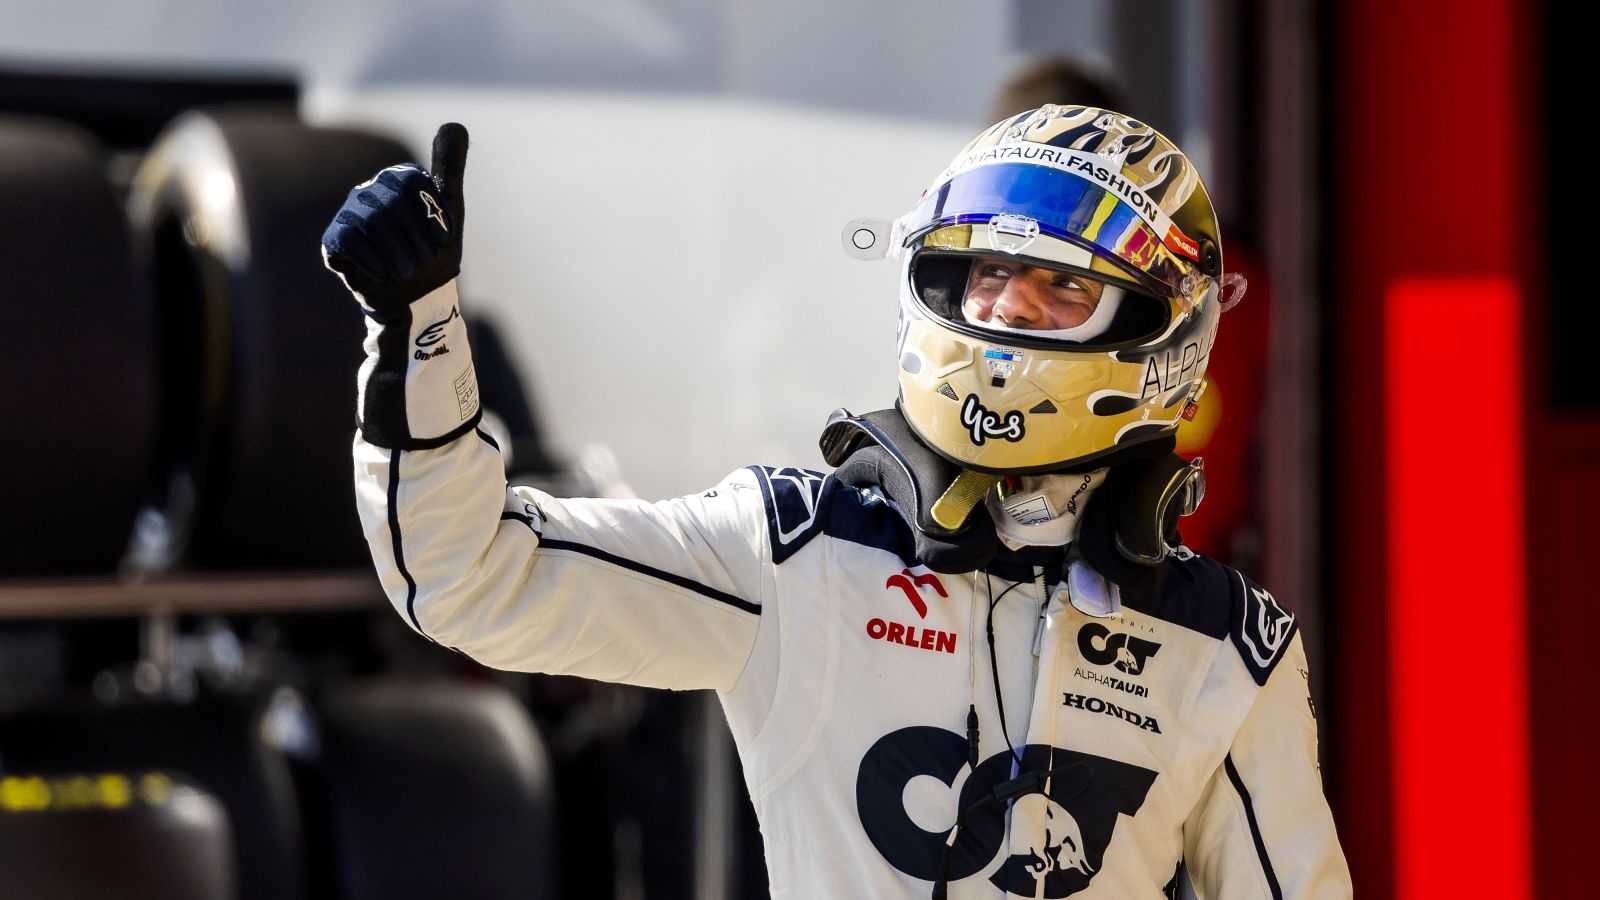 Christian Horner delivers verdict on Daniel Ricciardo's F1 qualifying